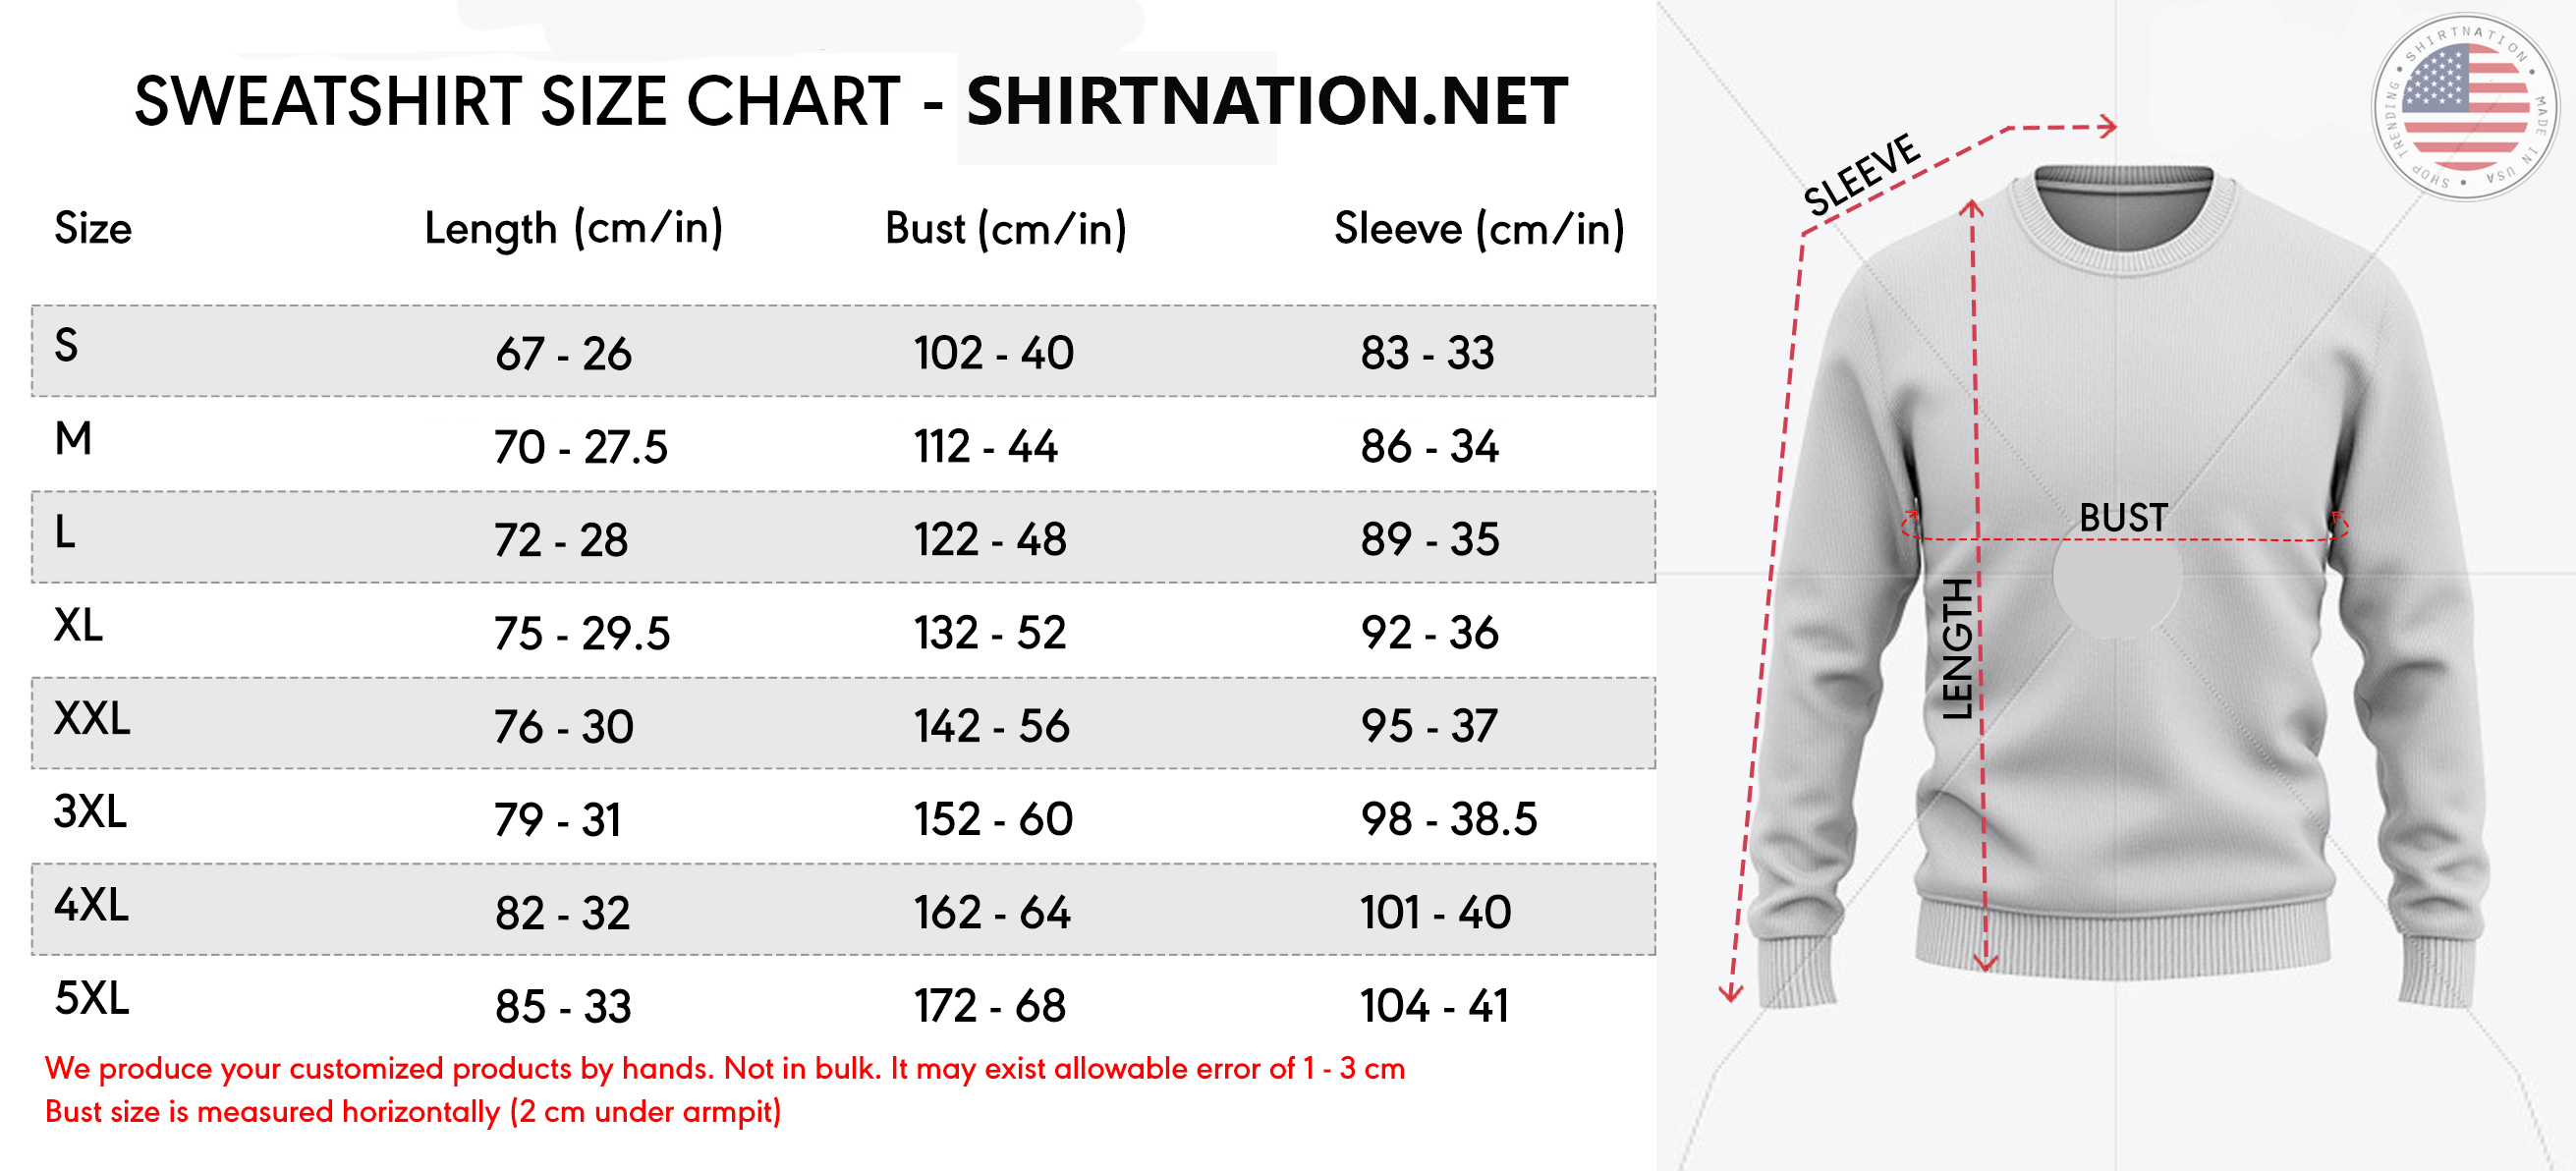 Sweatshirt Size Chart Shirtnation